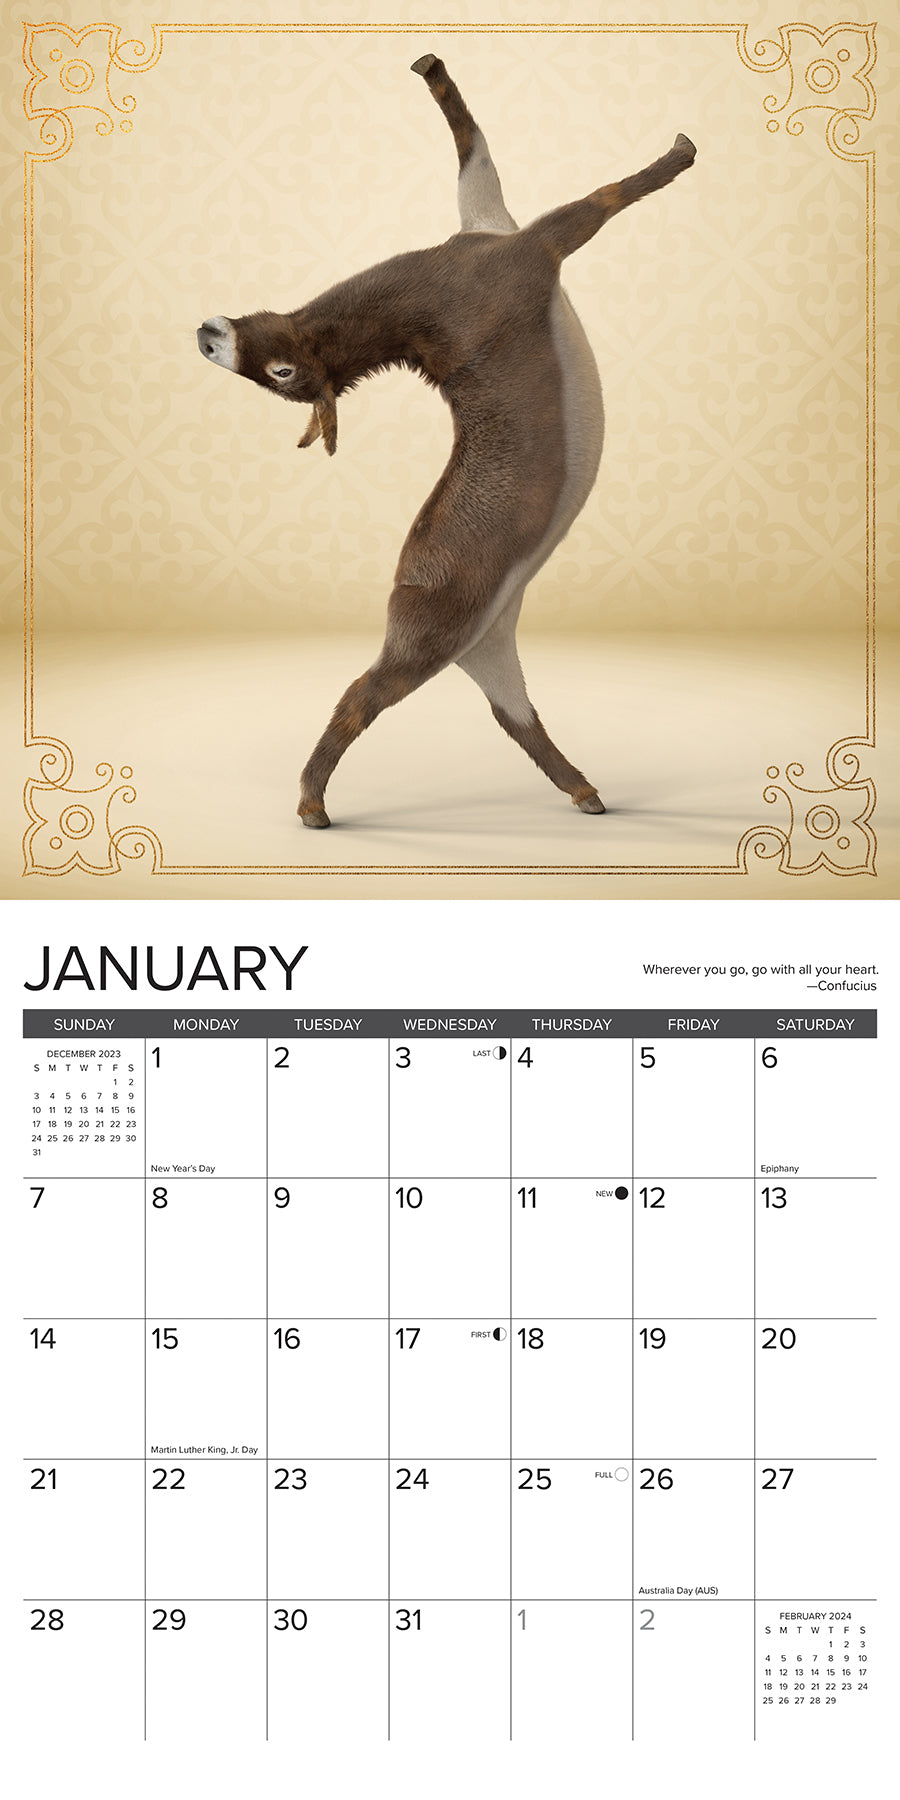 2024 Jackass Yoga - Square Wall Calendar